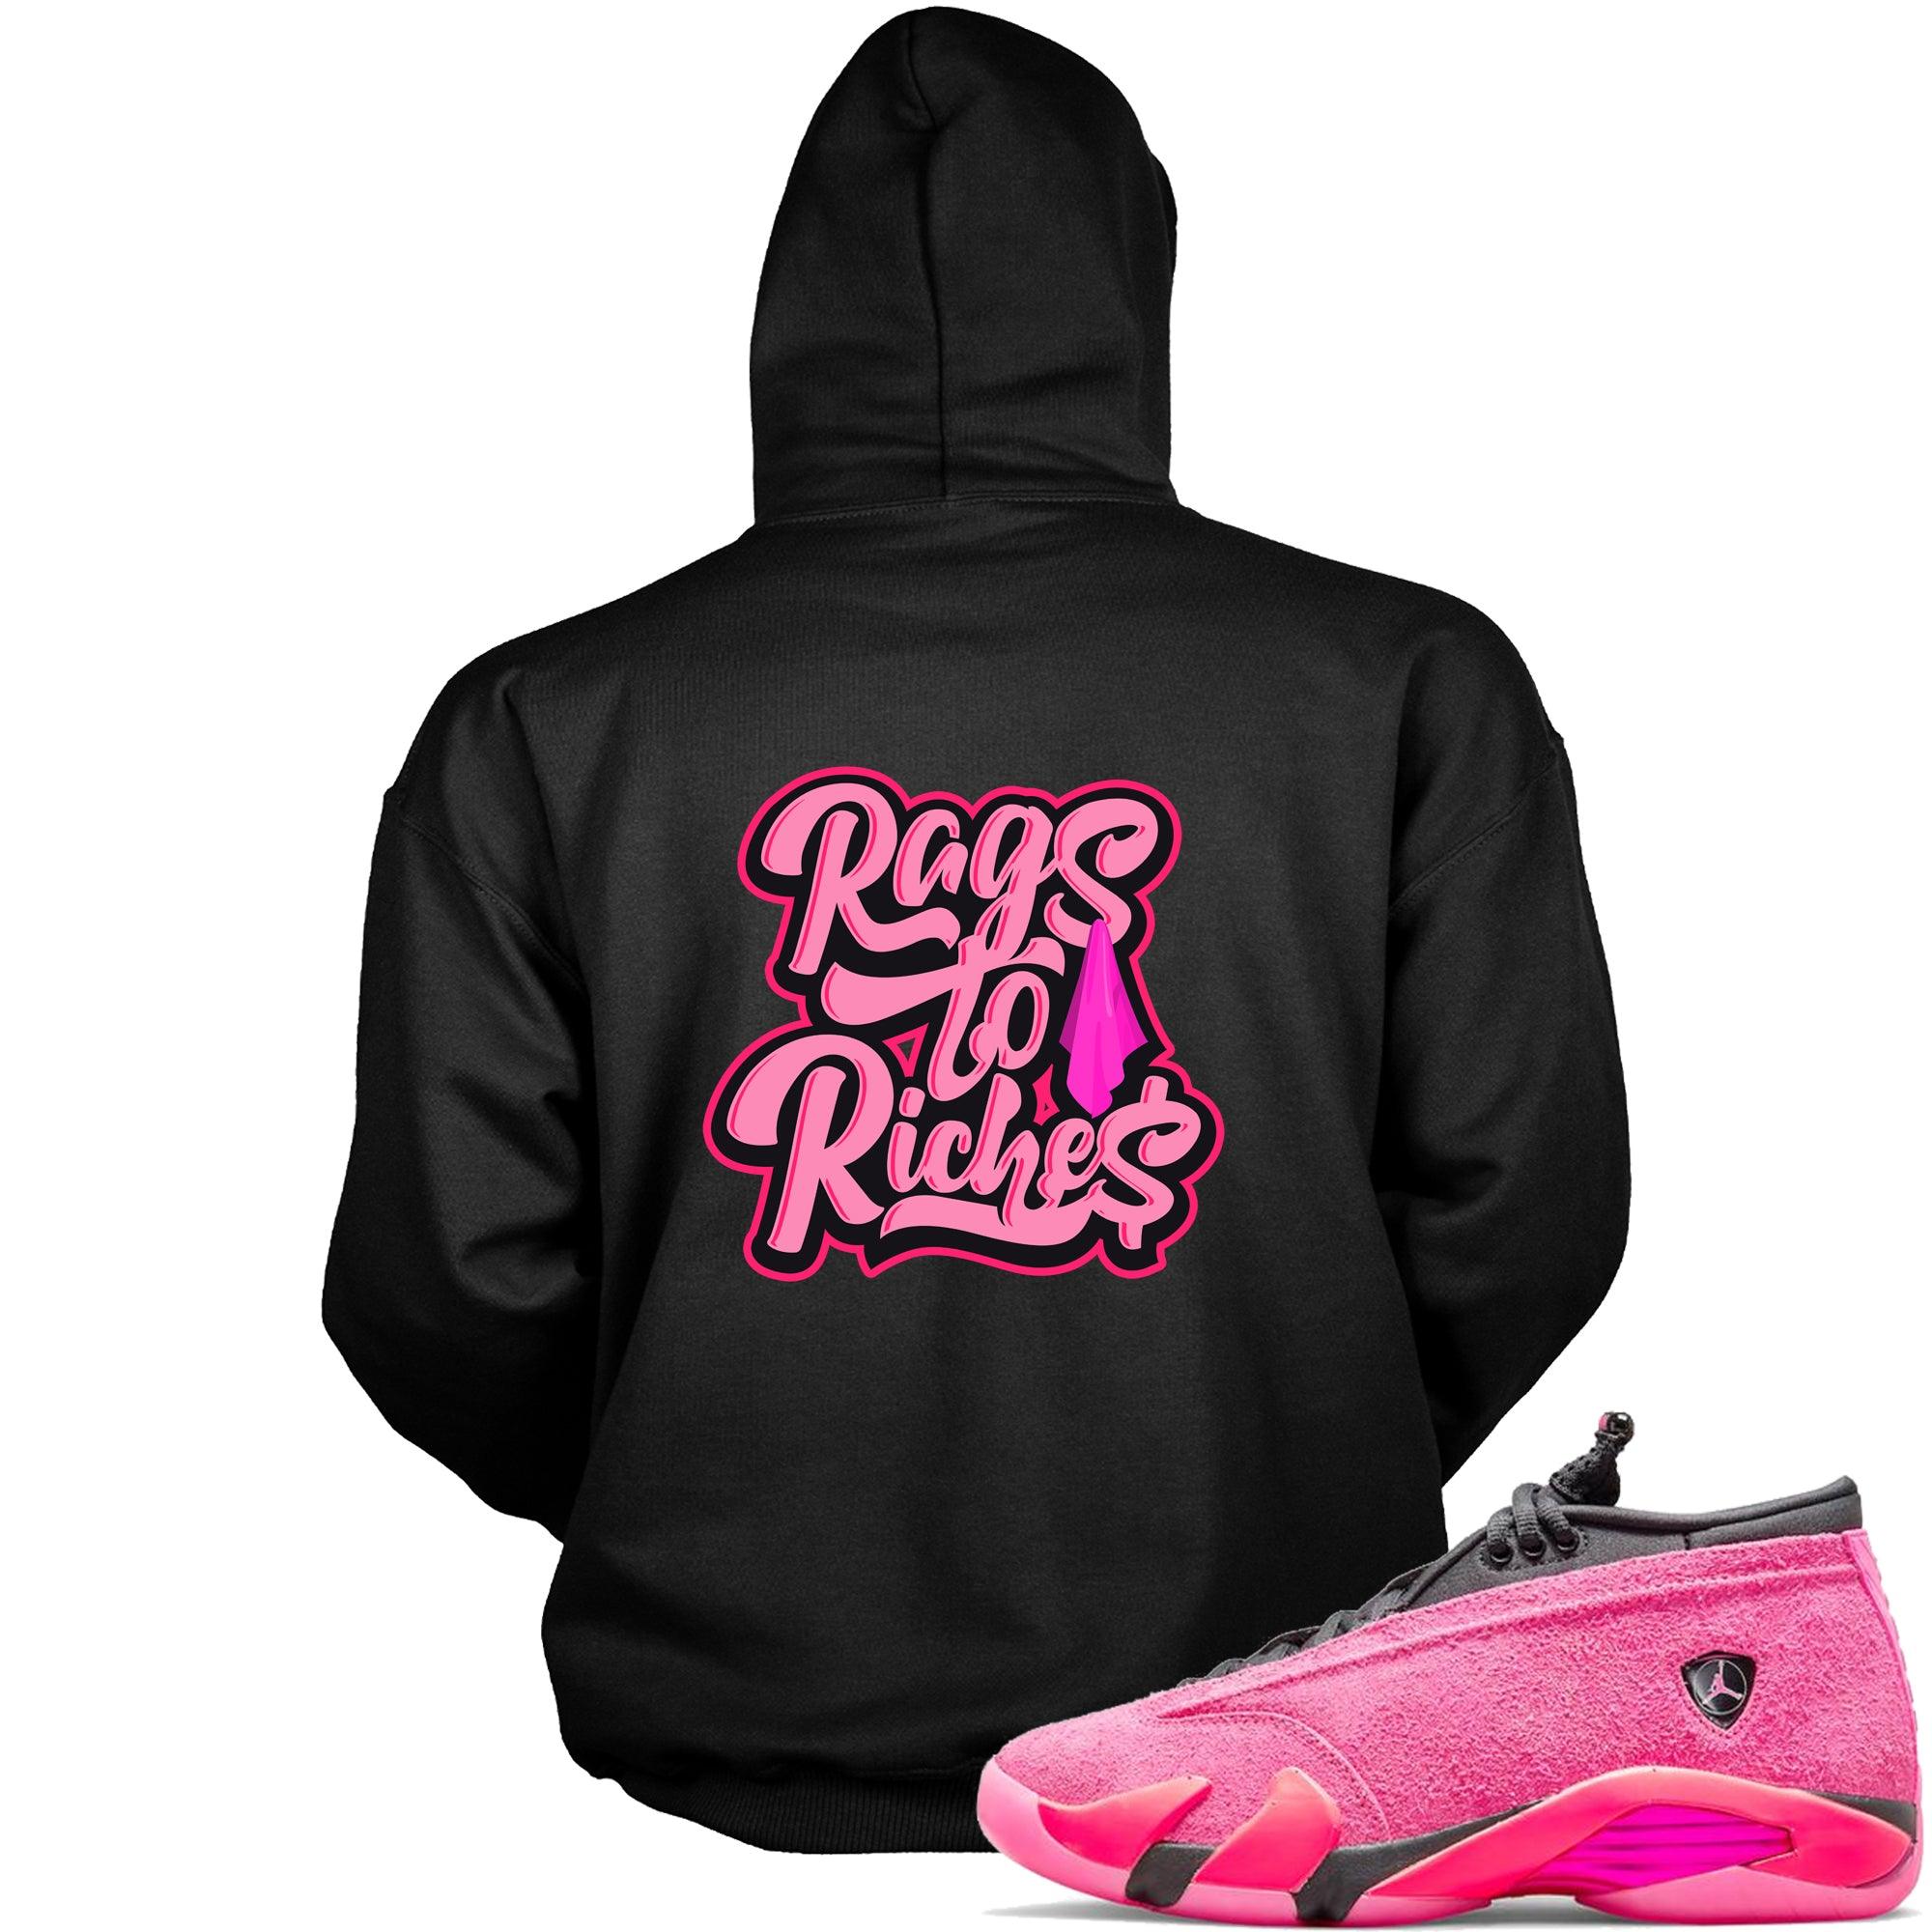 Black Rags to Riches Hoodie Jordan 14s Low Shocking Pink photo